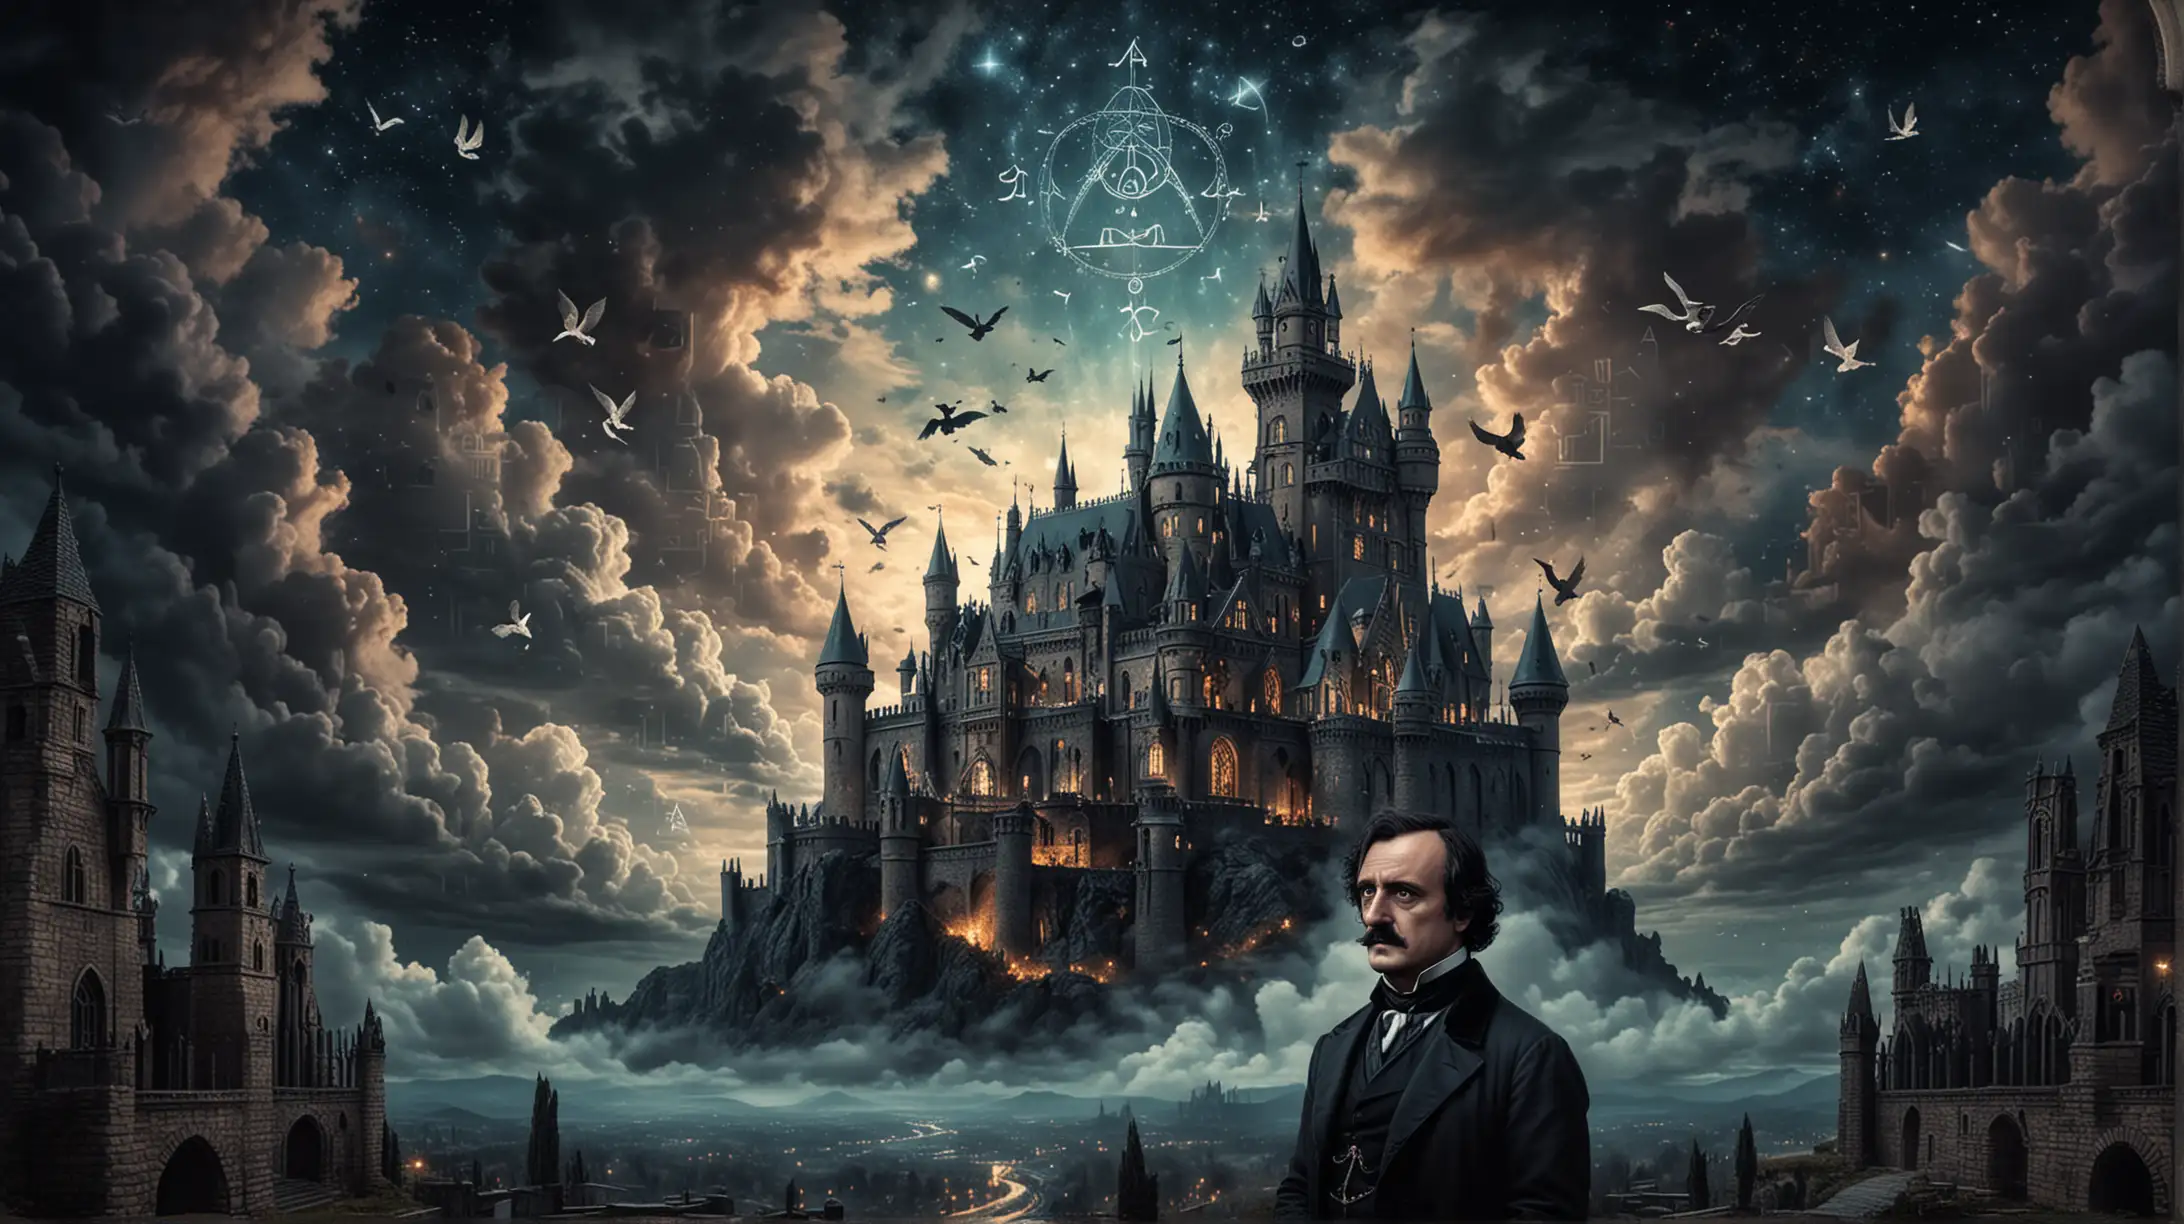 Edgar Allan Poe at Gothic Castle with Enochian Symbols in Night Sky